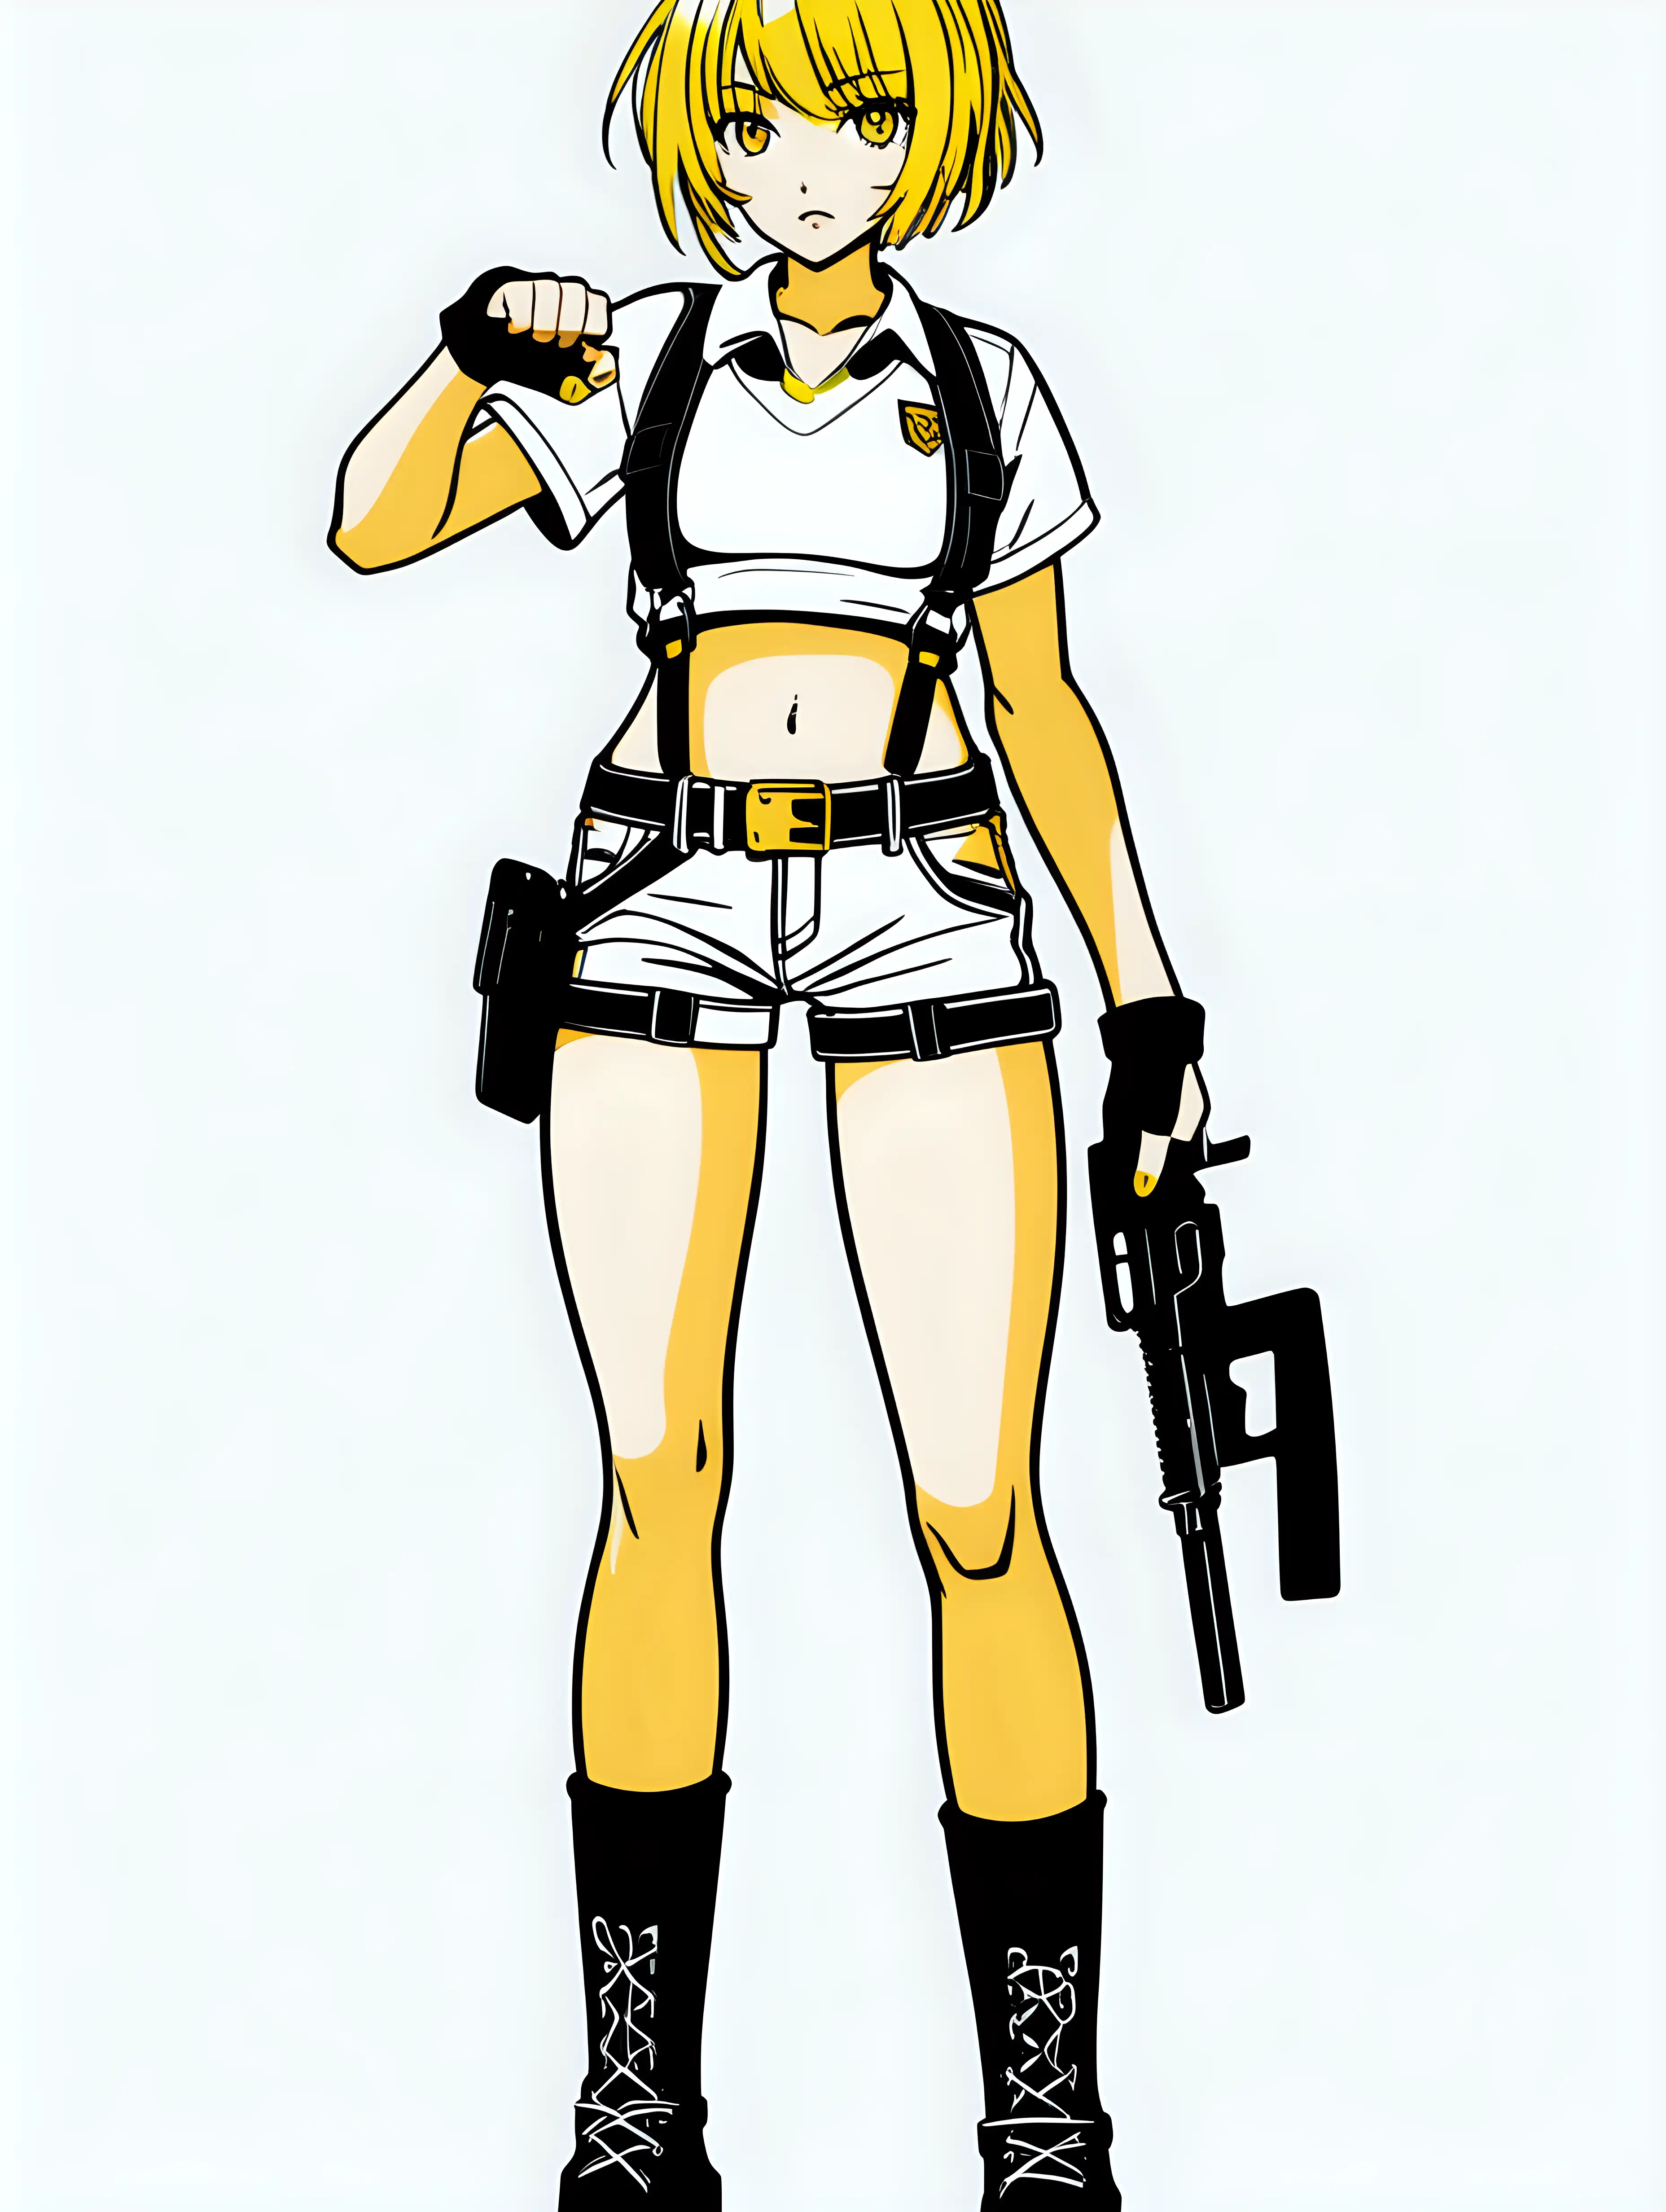 Seductive Anime Heroine in Stylish Monochrome Poster